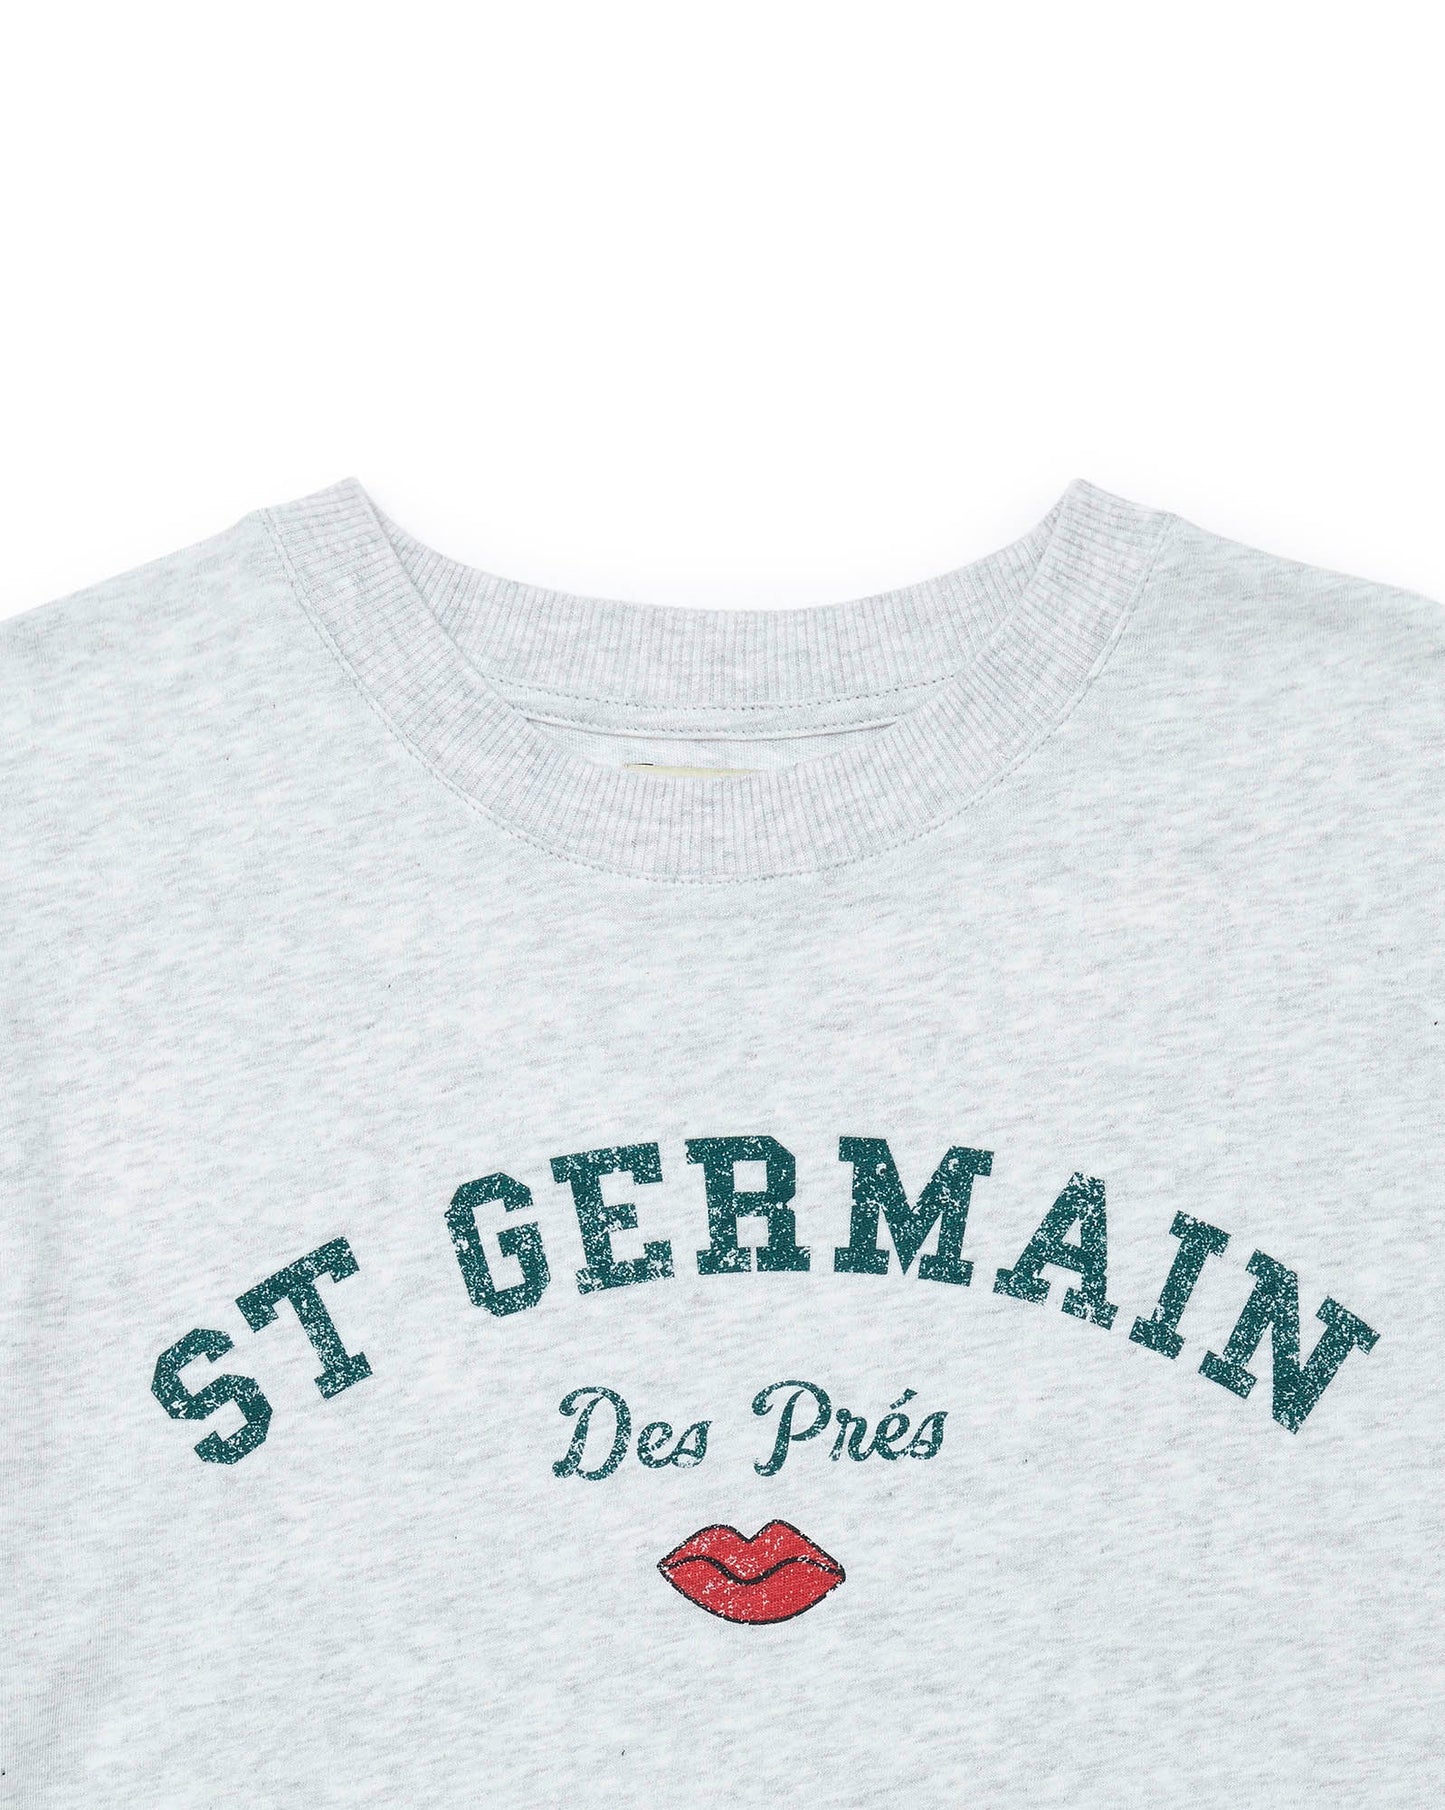 T-shirt - Saint Germain des Prés BONTON x Sonia Rykiel